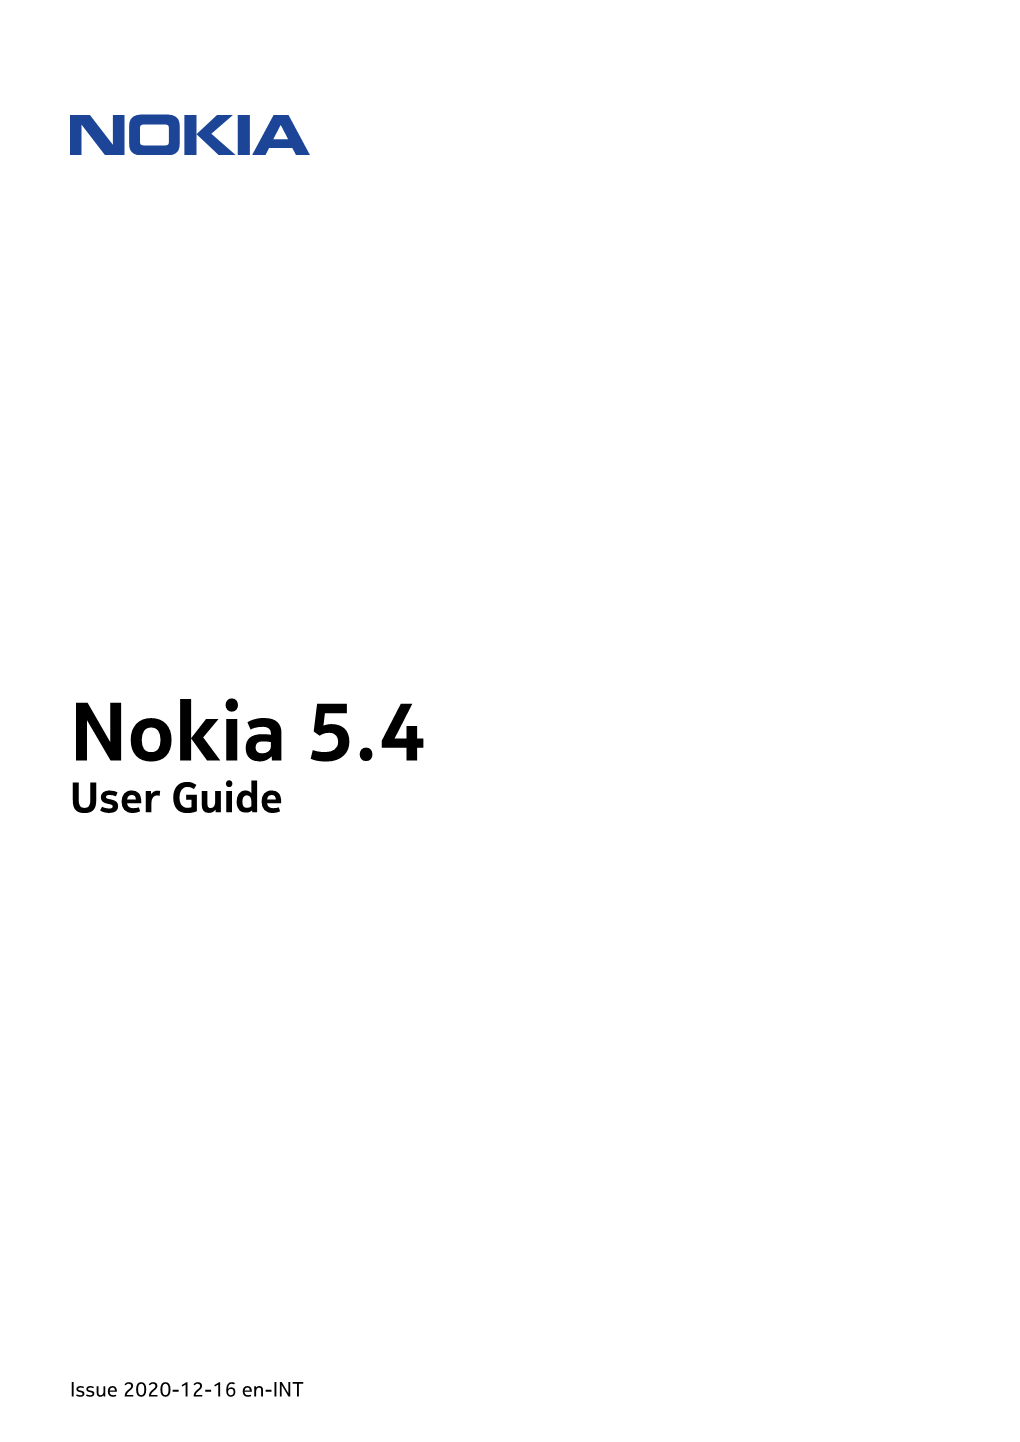 Nokia 5.4 User Guide